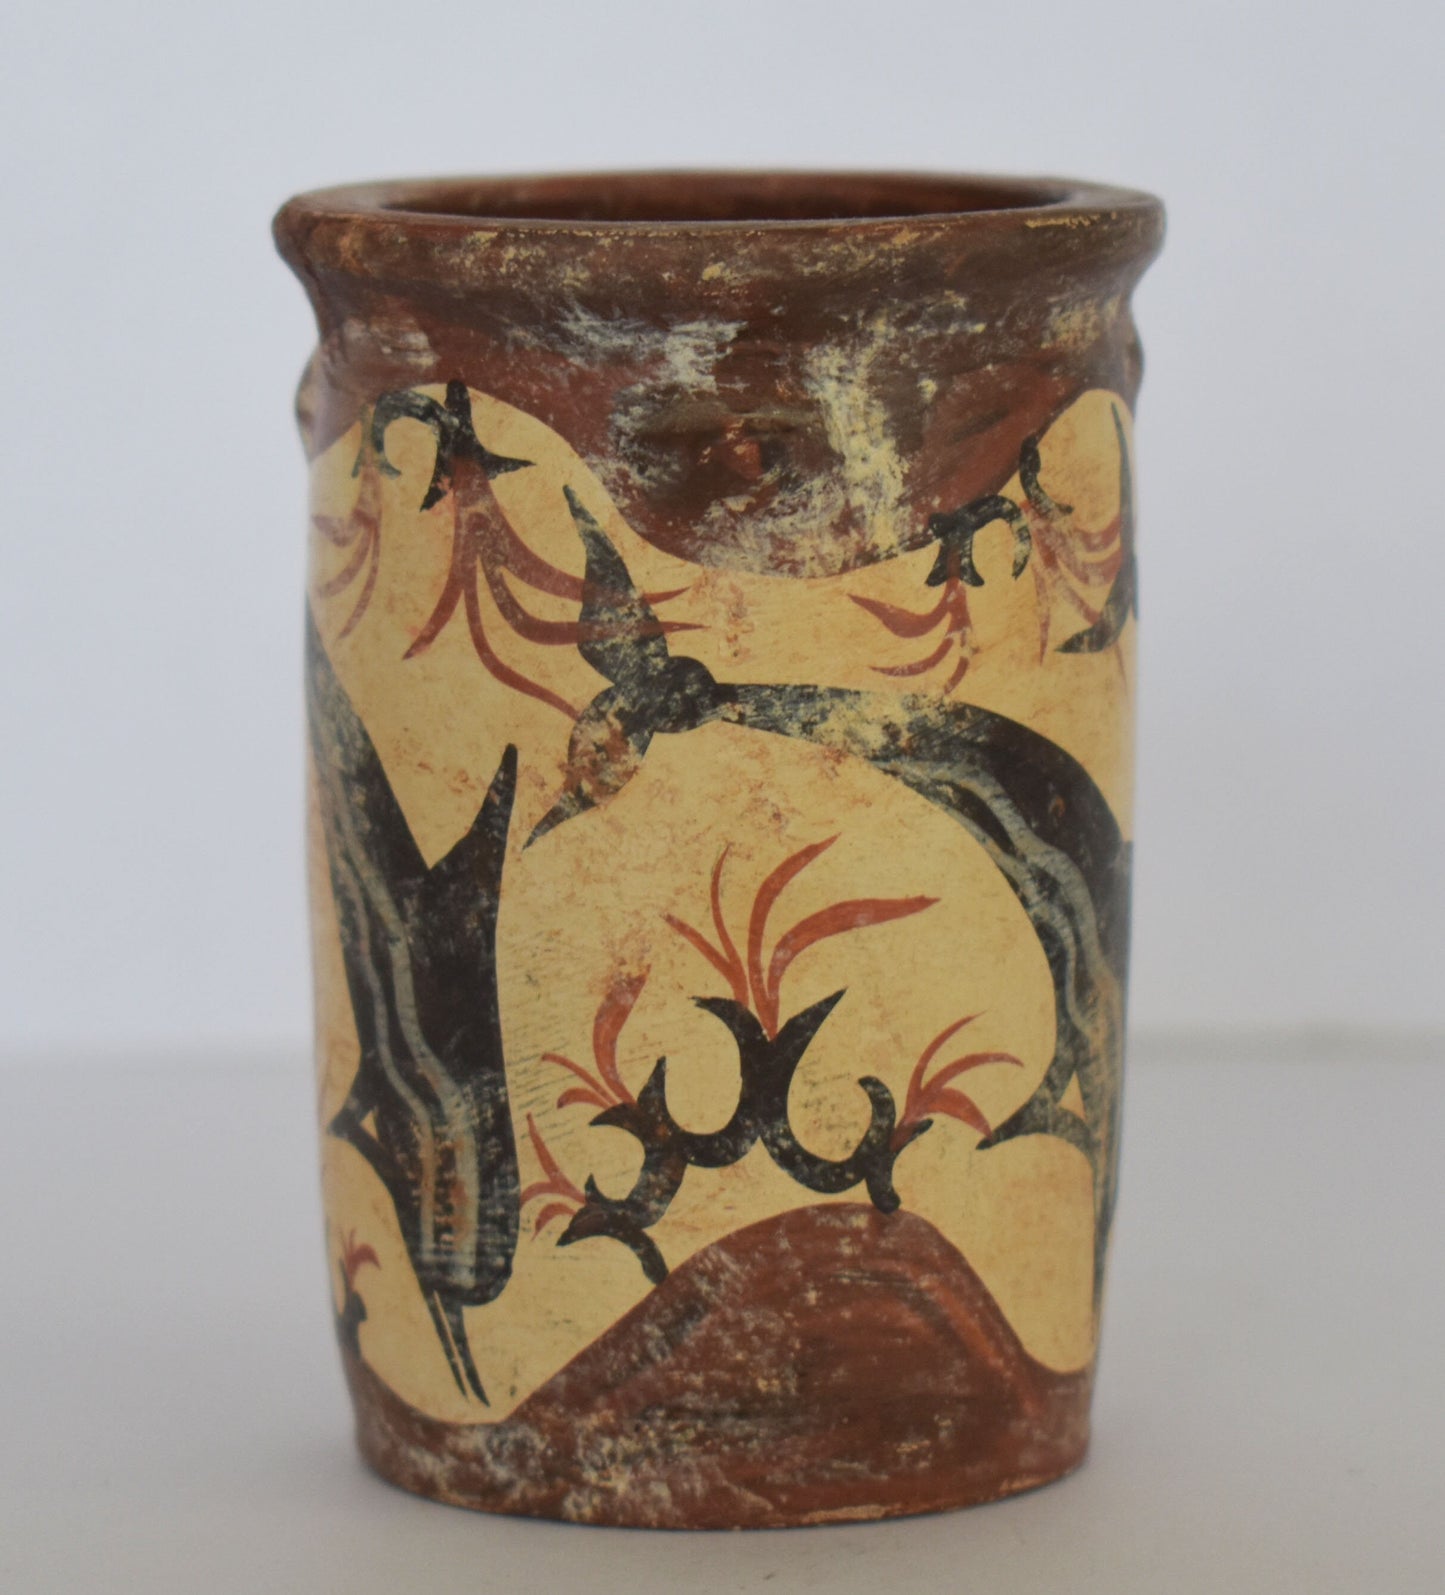 Vessel with Dolphins - Minoan - 1800 BC - Knossos Palace - Crete - Miniature - Ceramic Vase